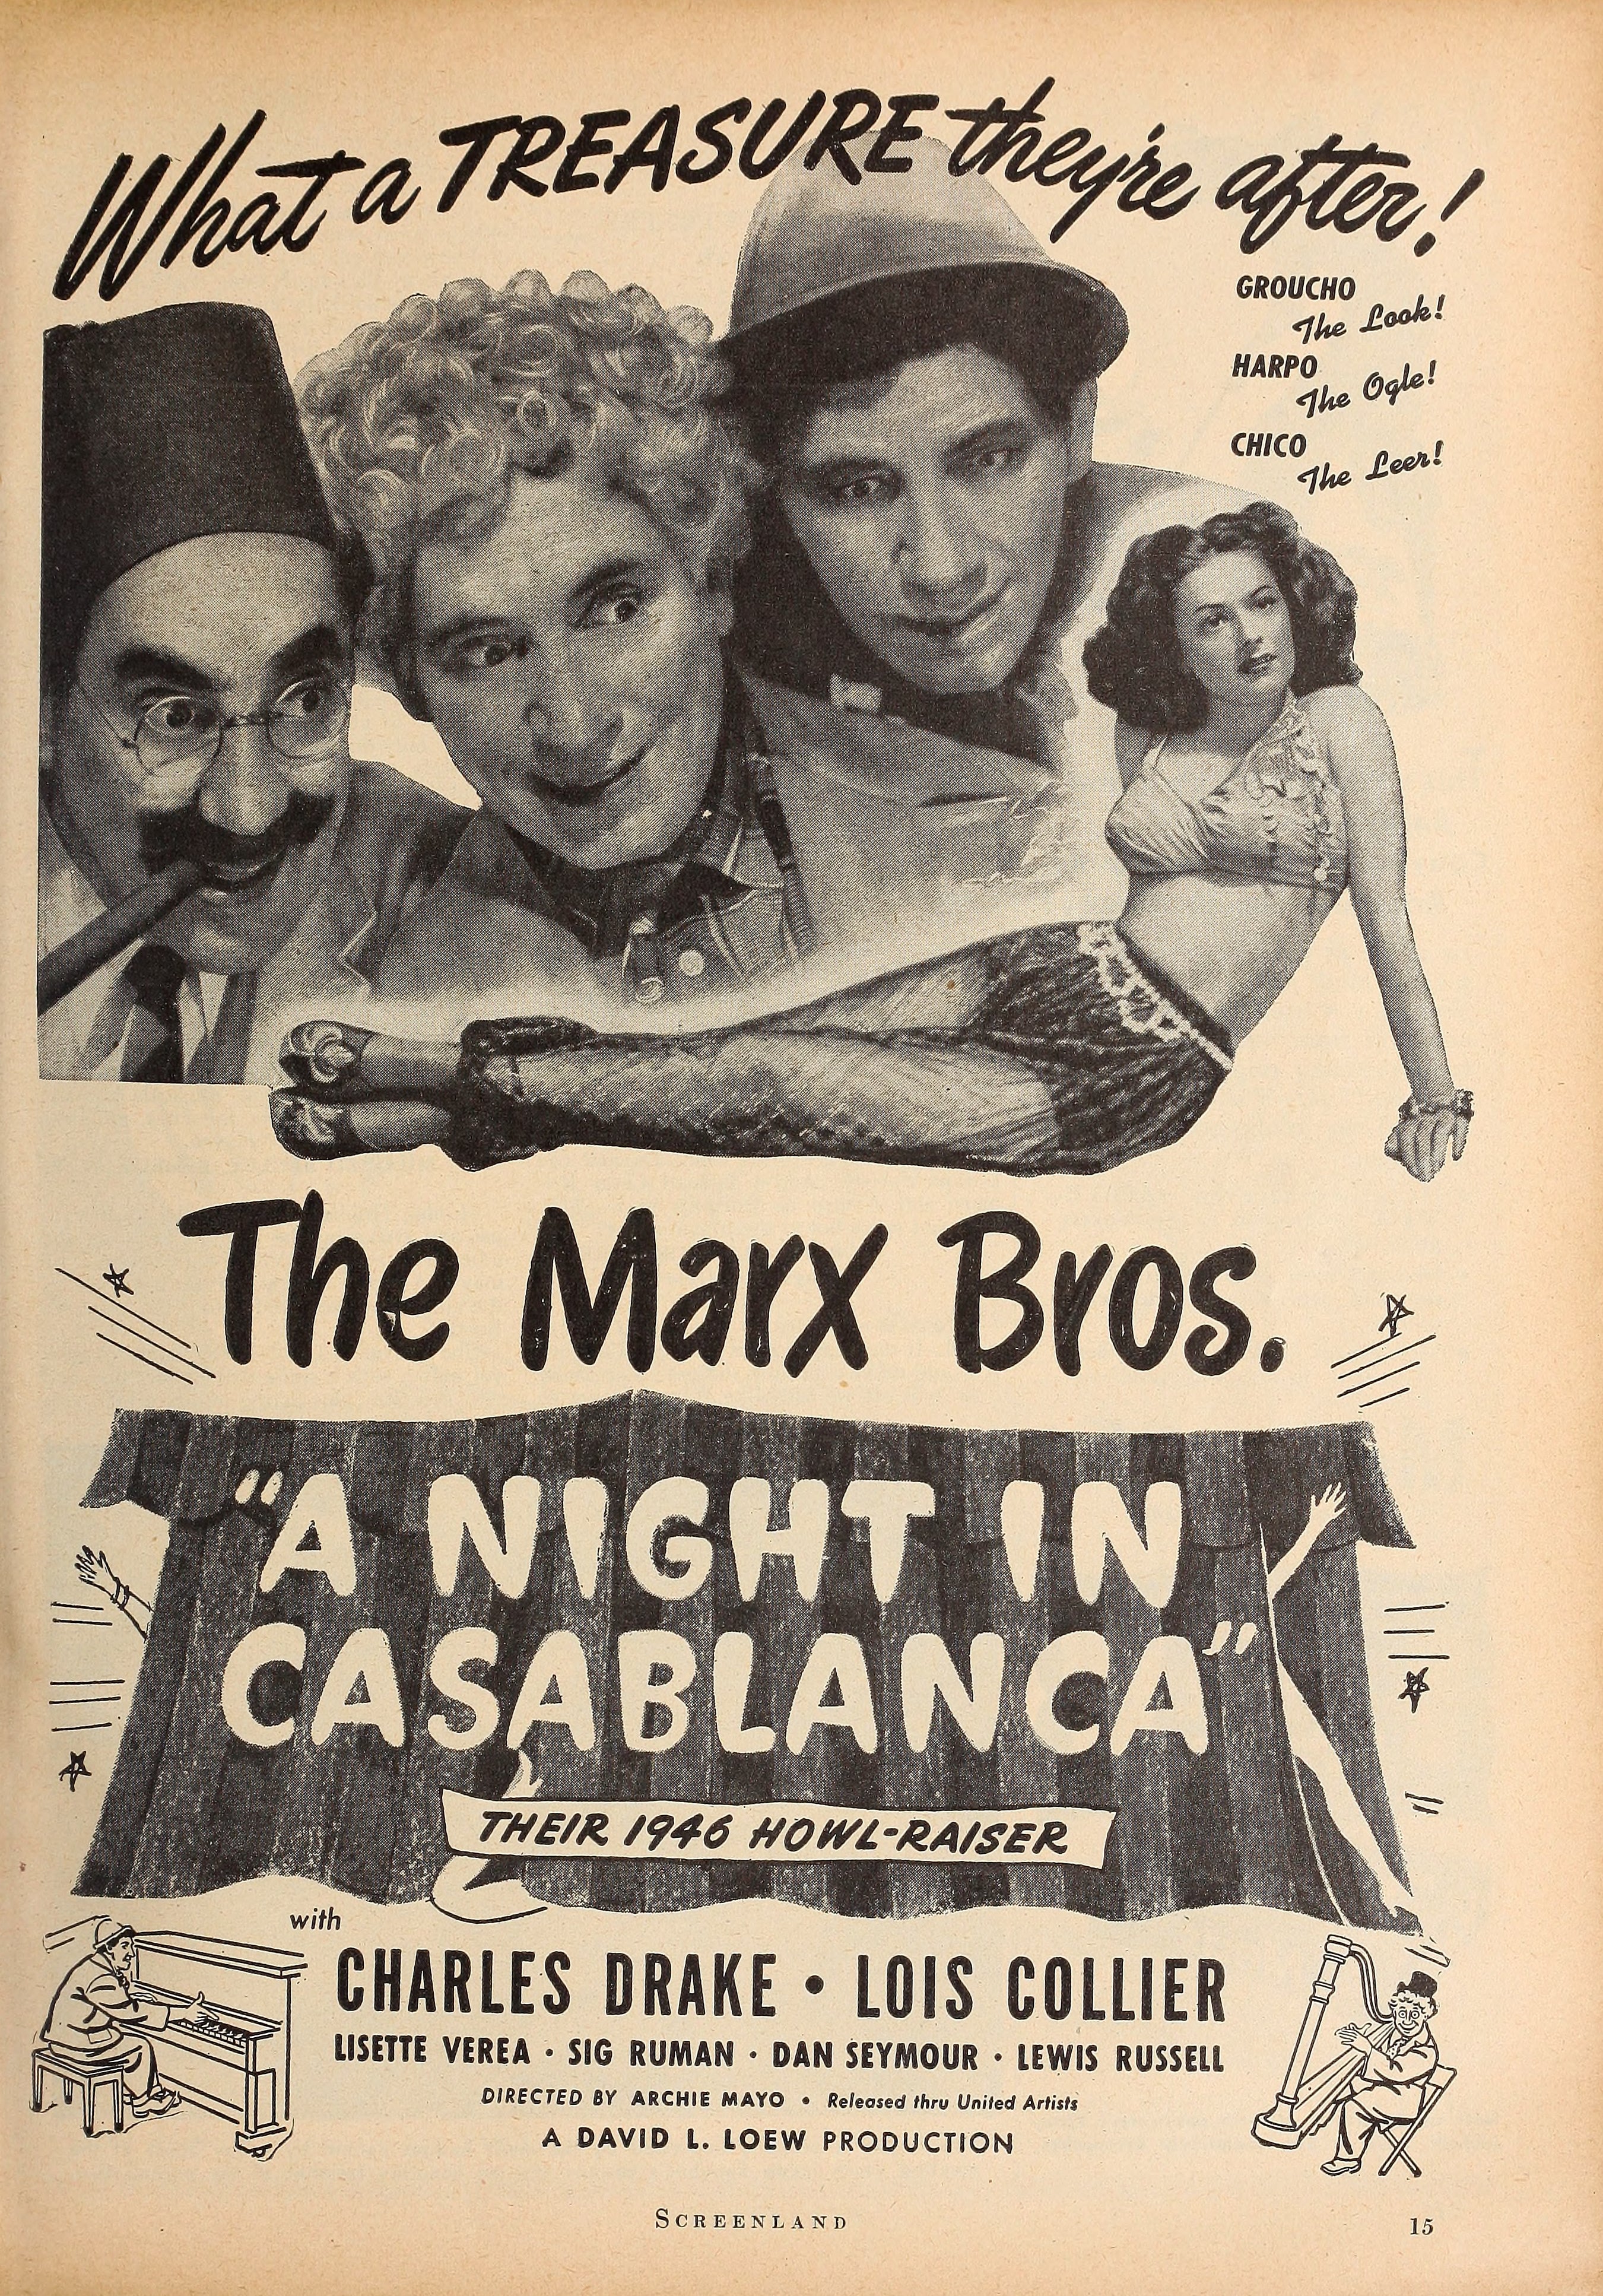 A Night in Casablanca (1946) | www.vintoz.com